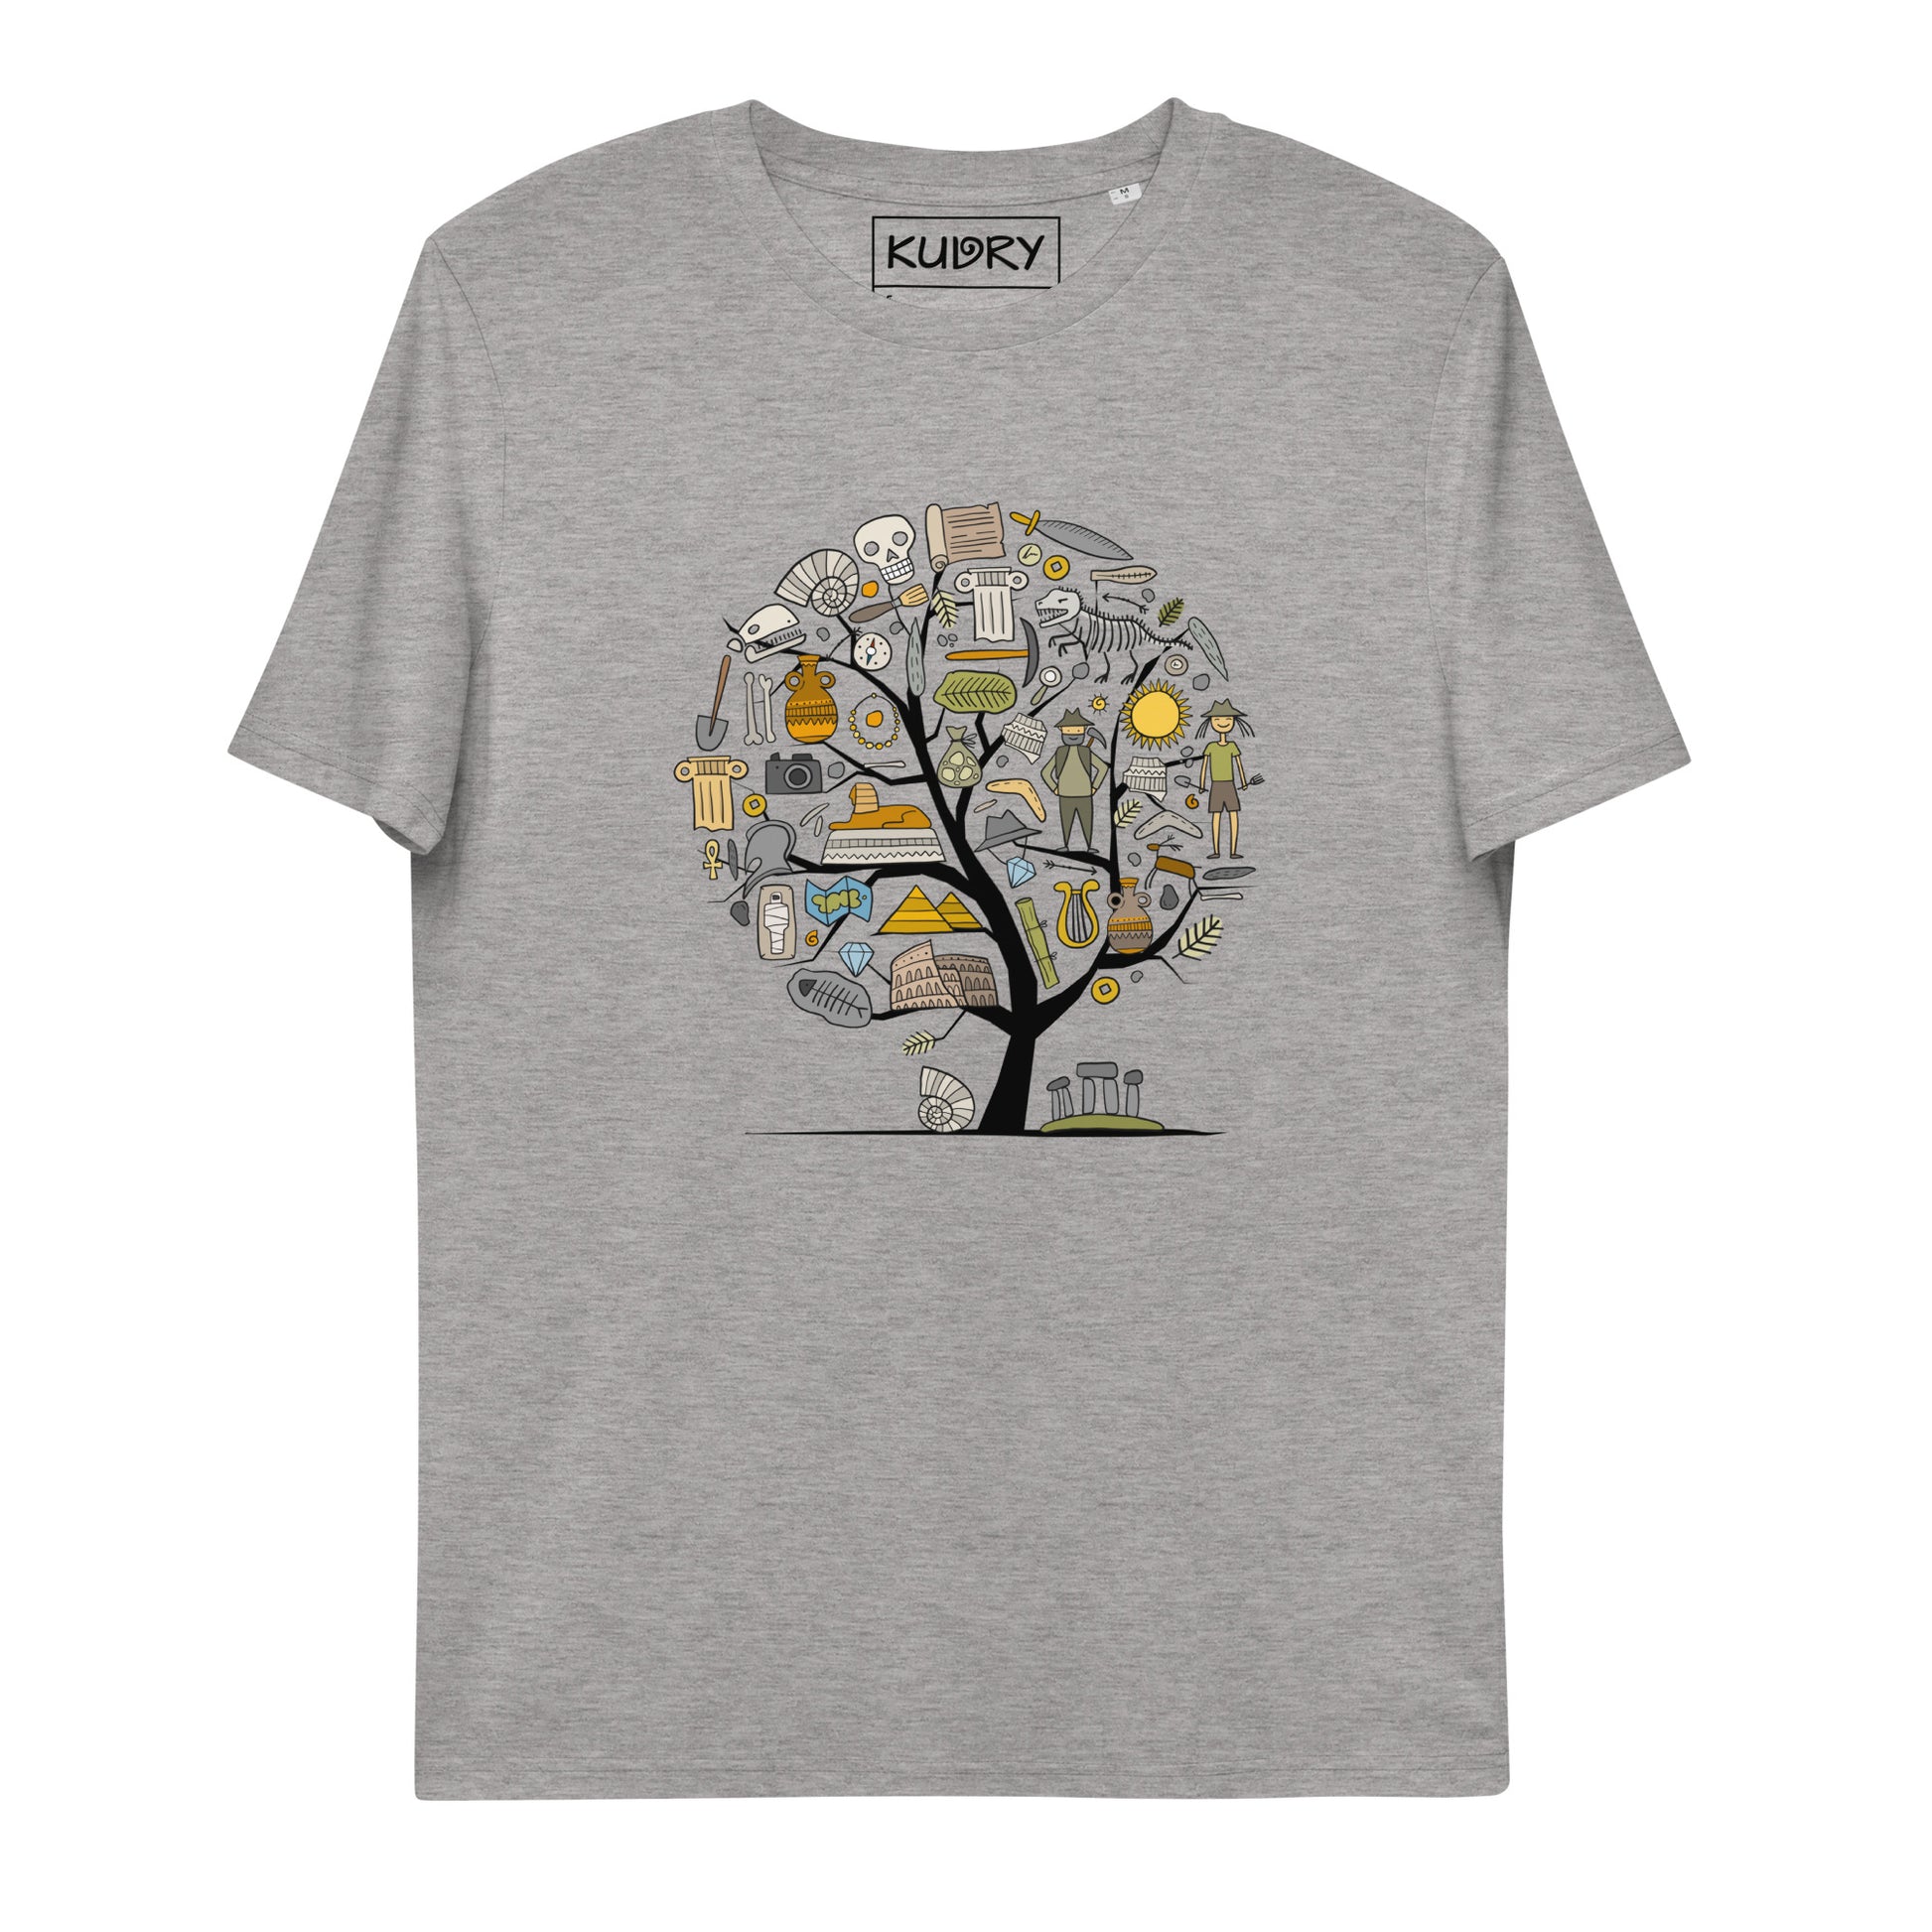 Unisex organic cotton grey t-shirt with Archeology designer print - concept art tree. Kudry